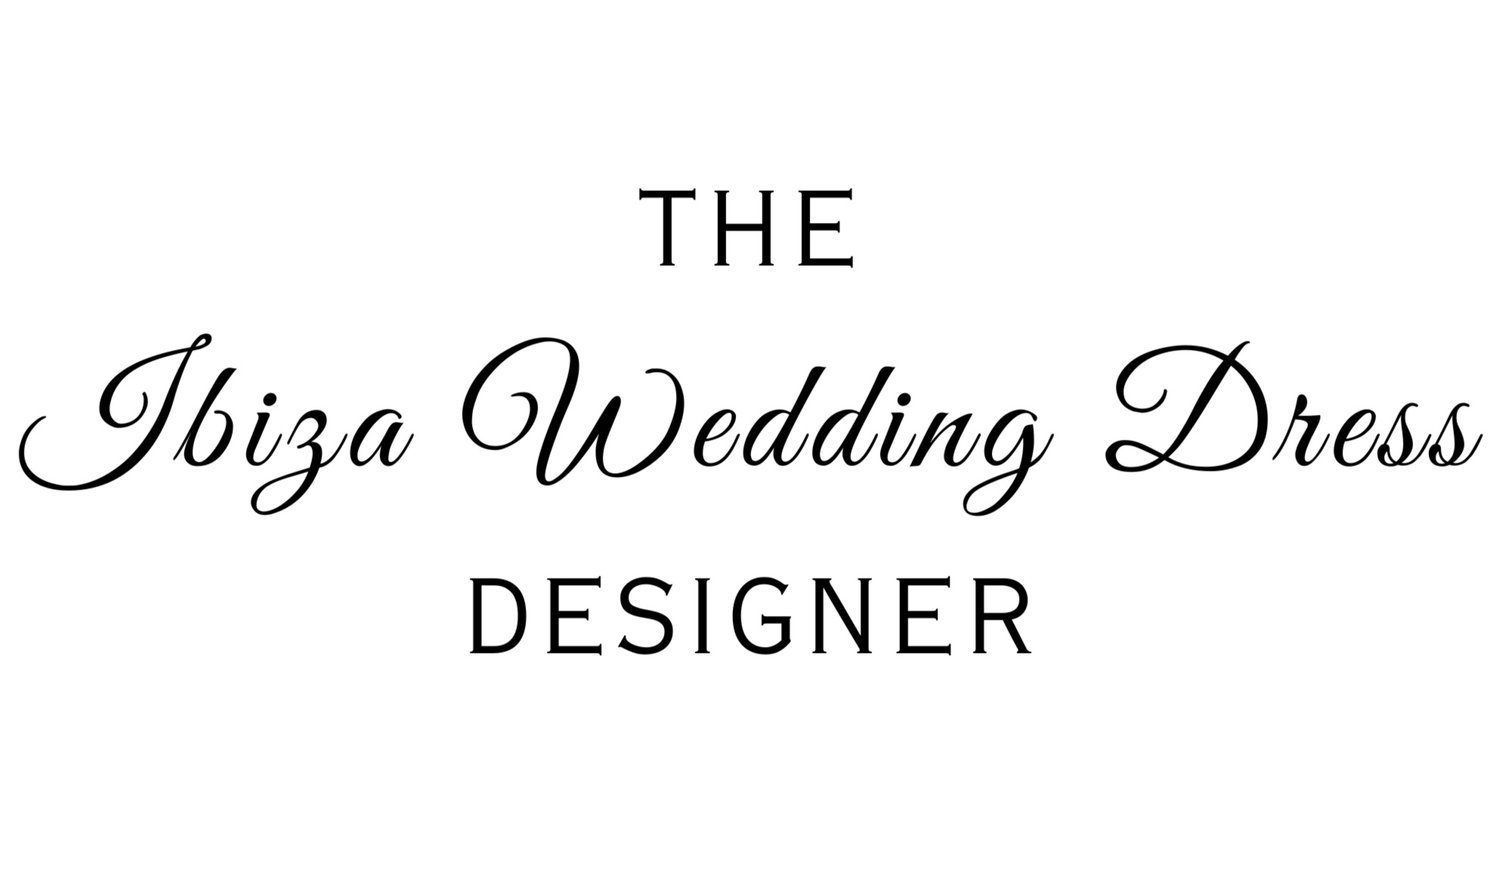 THE IBIZA WEDDING DRESS DESIGNER